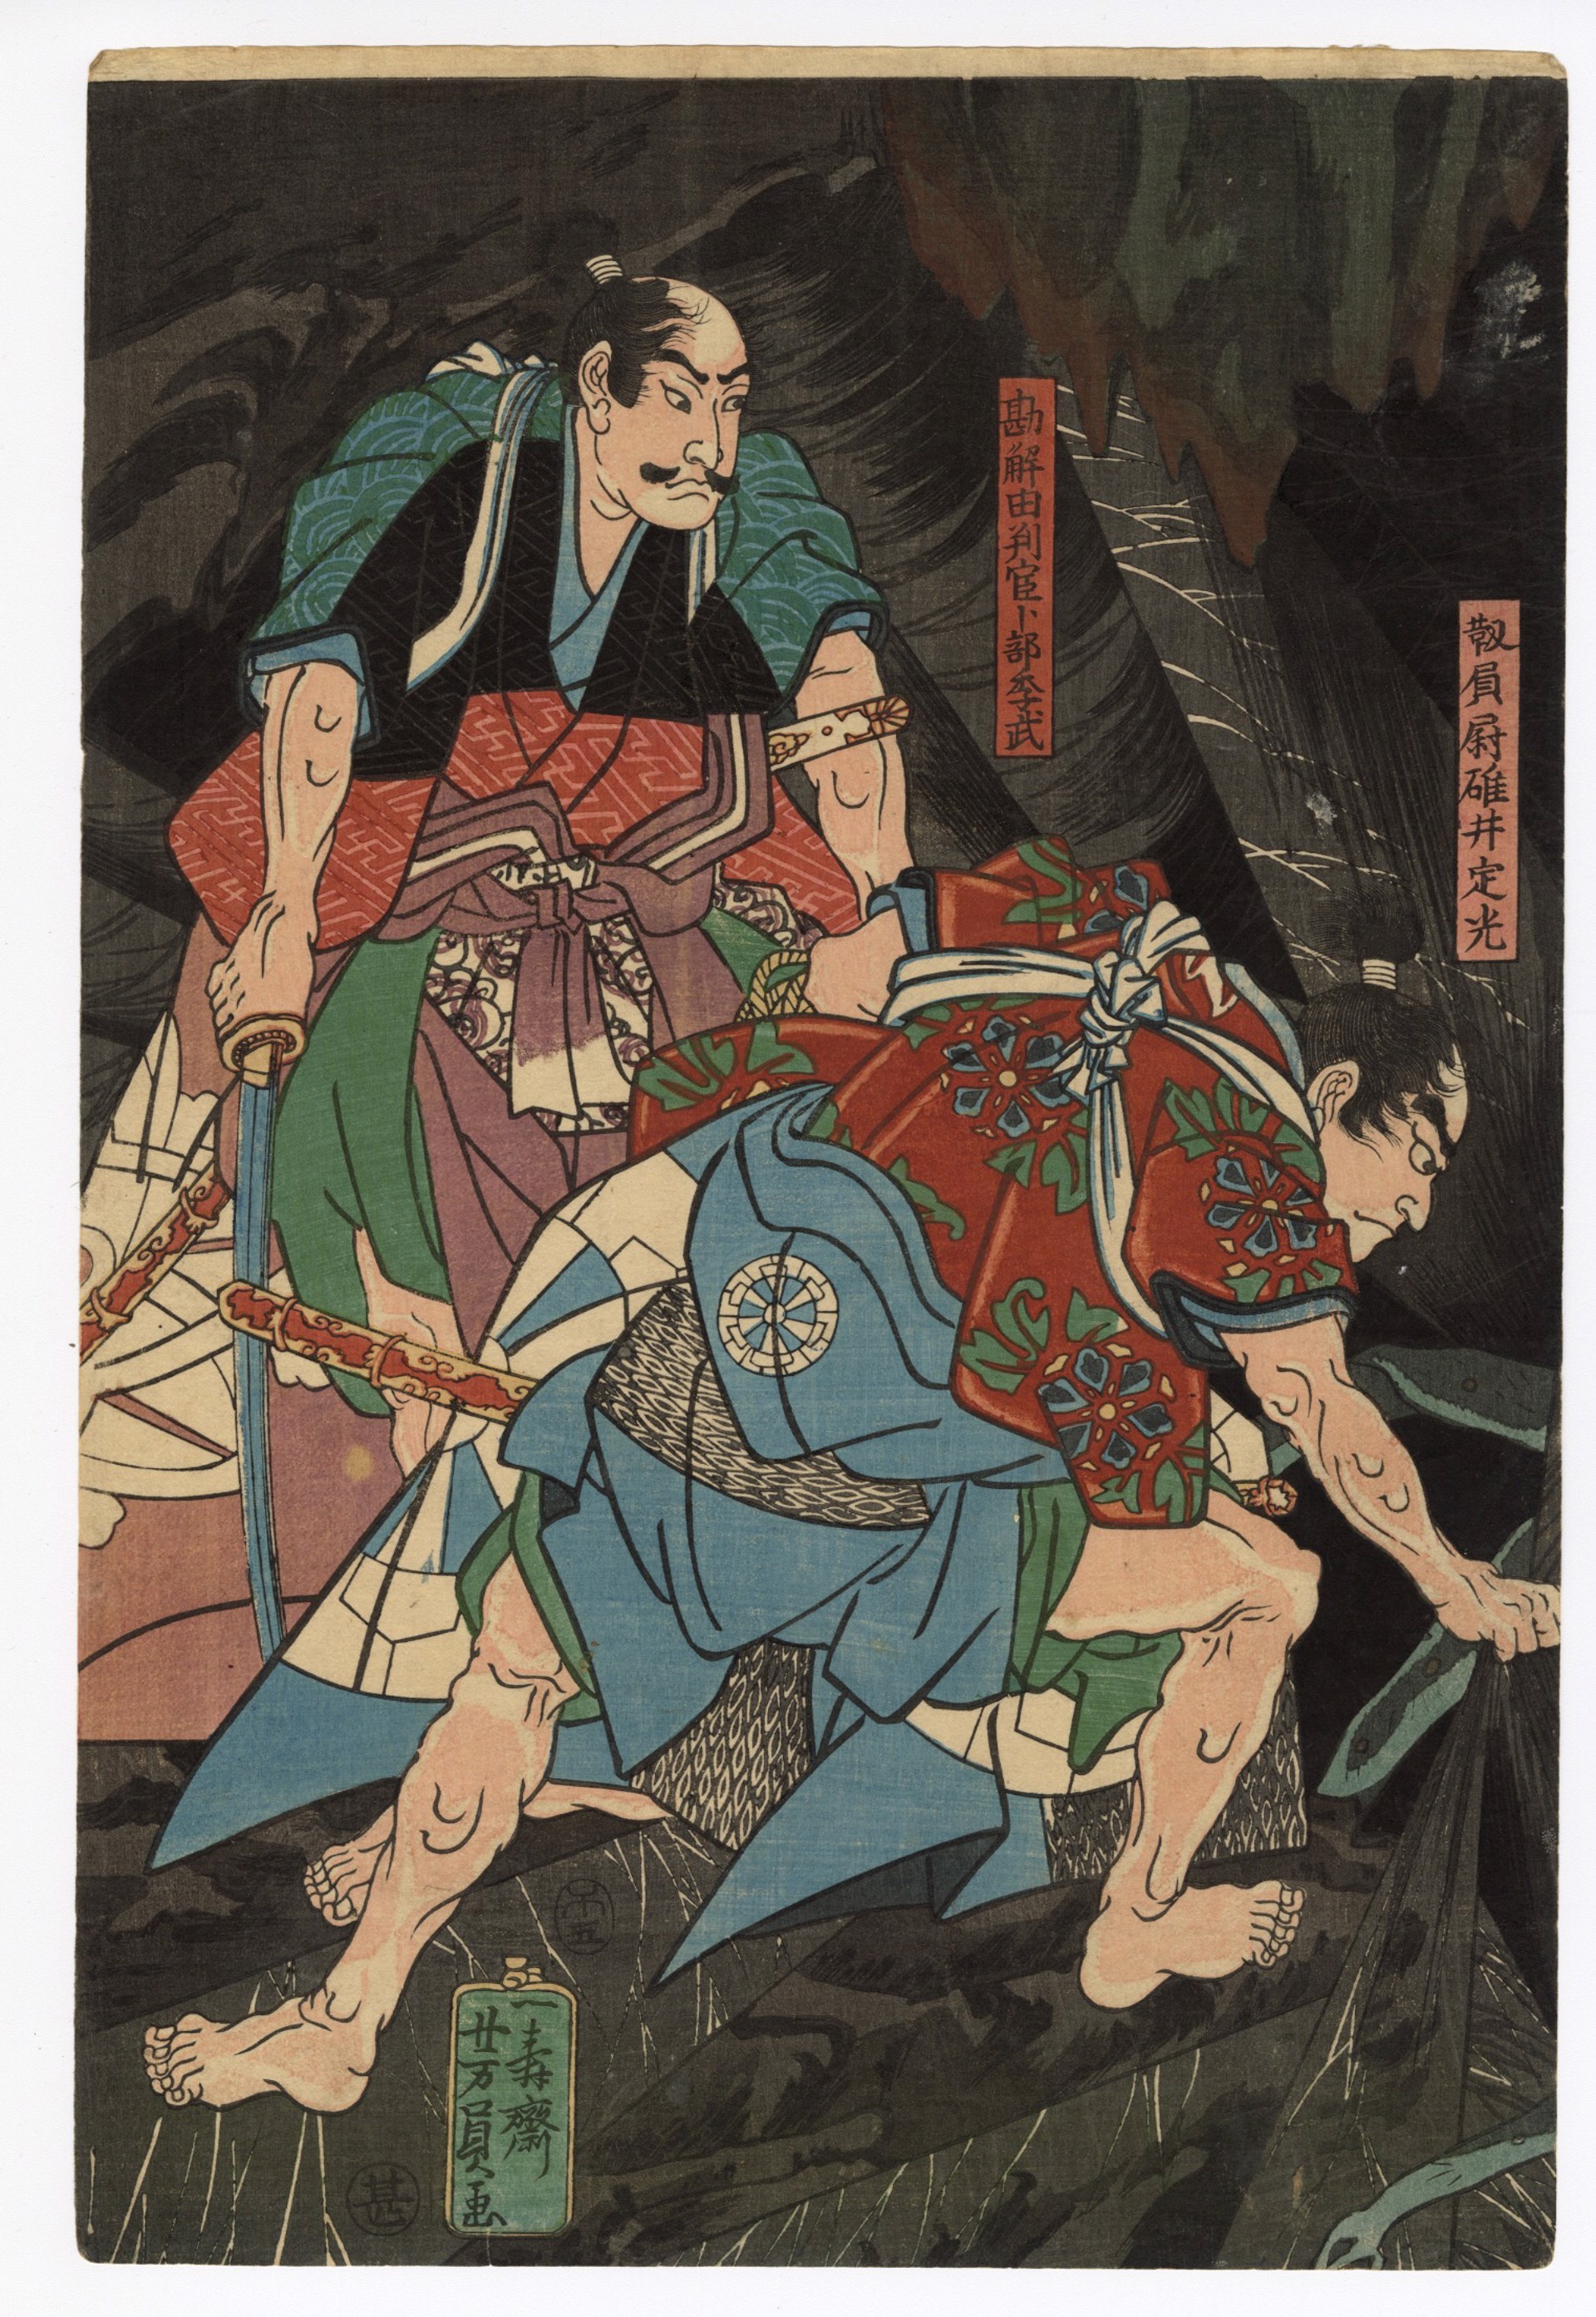 Minamoto no Yorimitsu, also known as Raiko, and his Loyal Retainers Killing the Giant Earth Spider by Yoshikazu